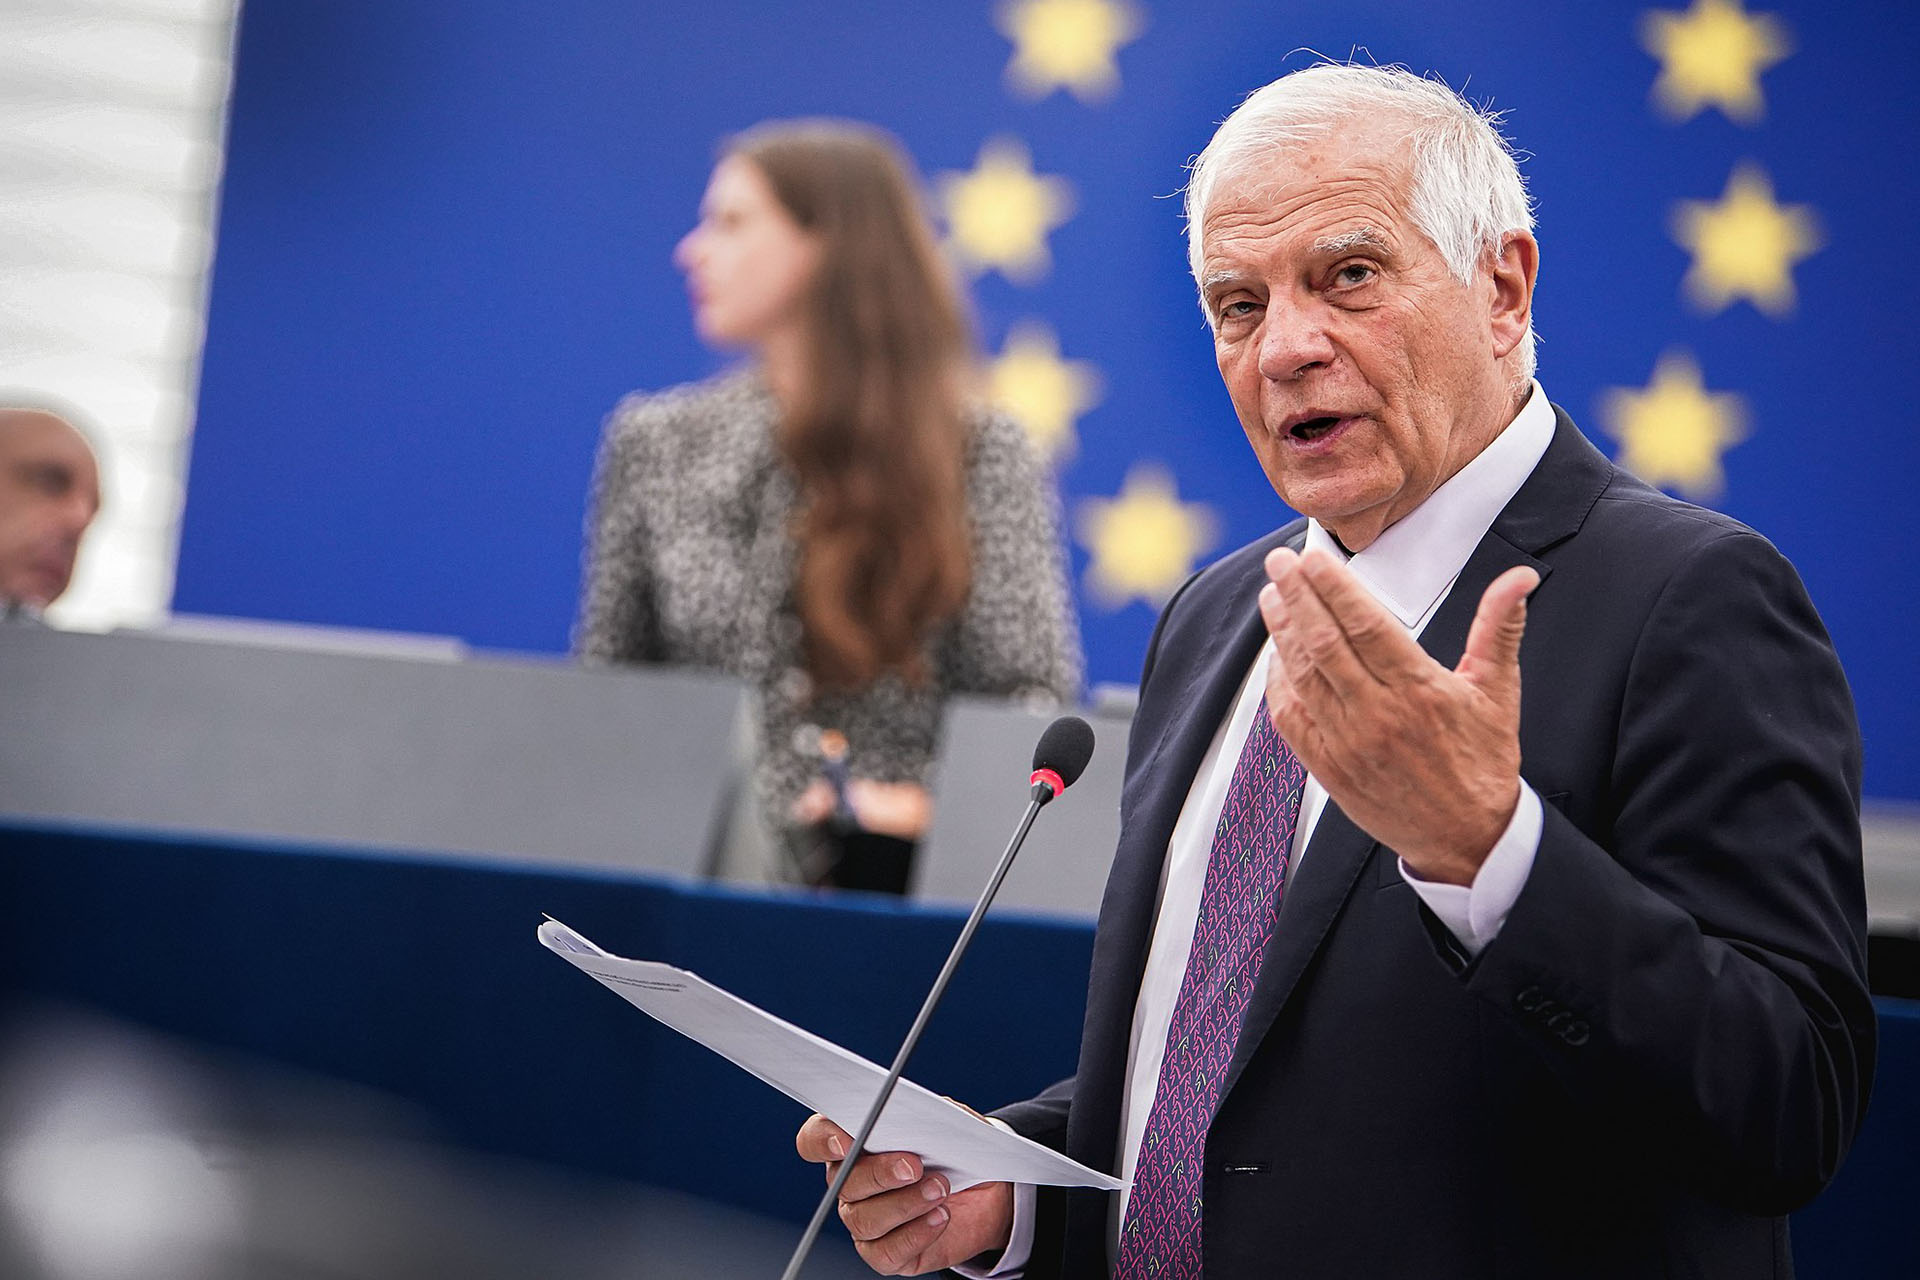 Bild: European Parliament from EU, Questions and Answers with EU Foreign Policy Chief Josep Borrell (52359673274), CC BY 2.0, via Wikimedia Commons (Bildgröße geändert)